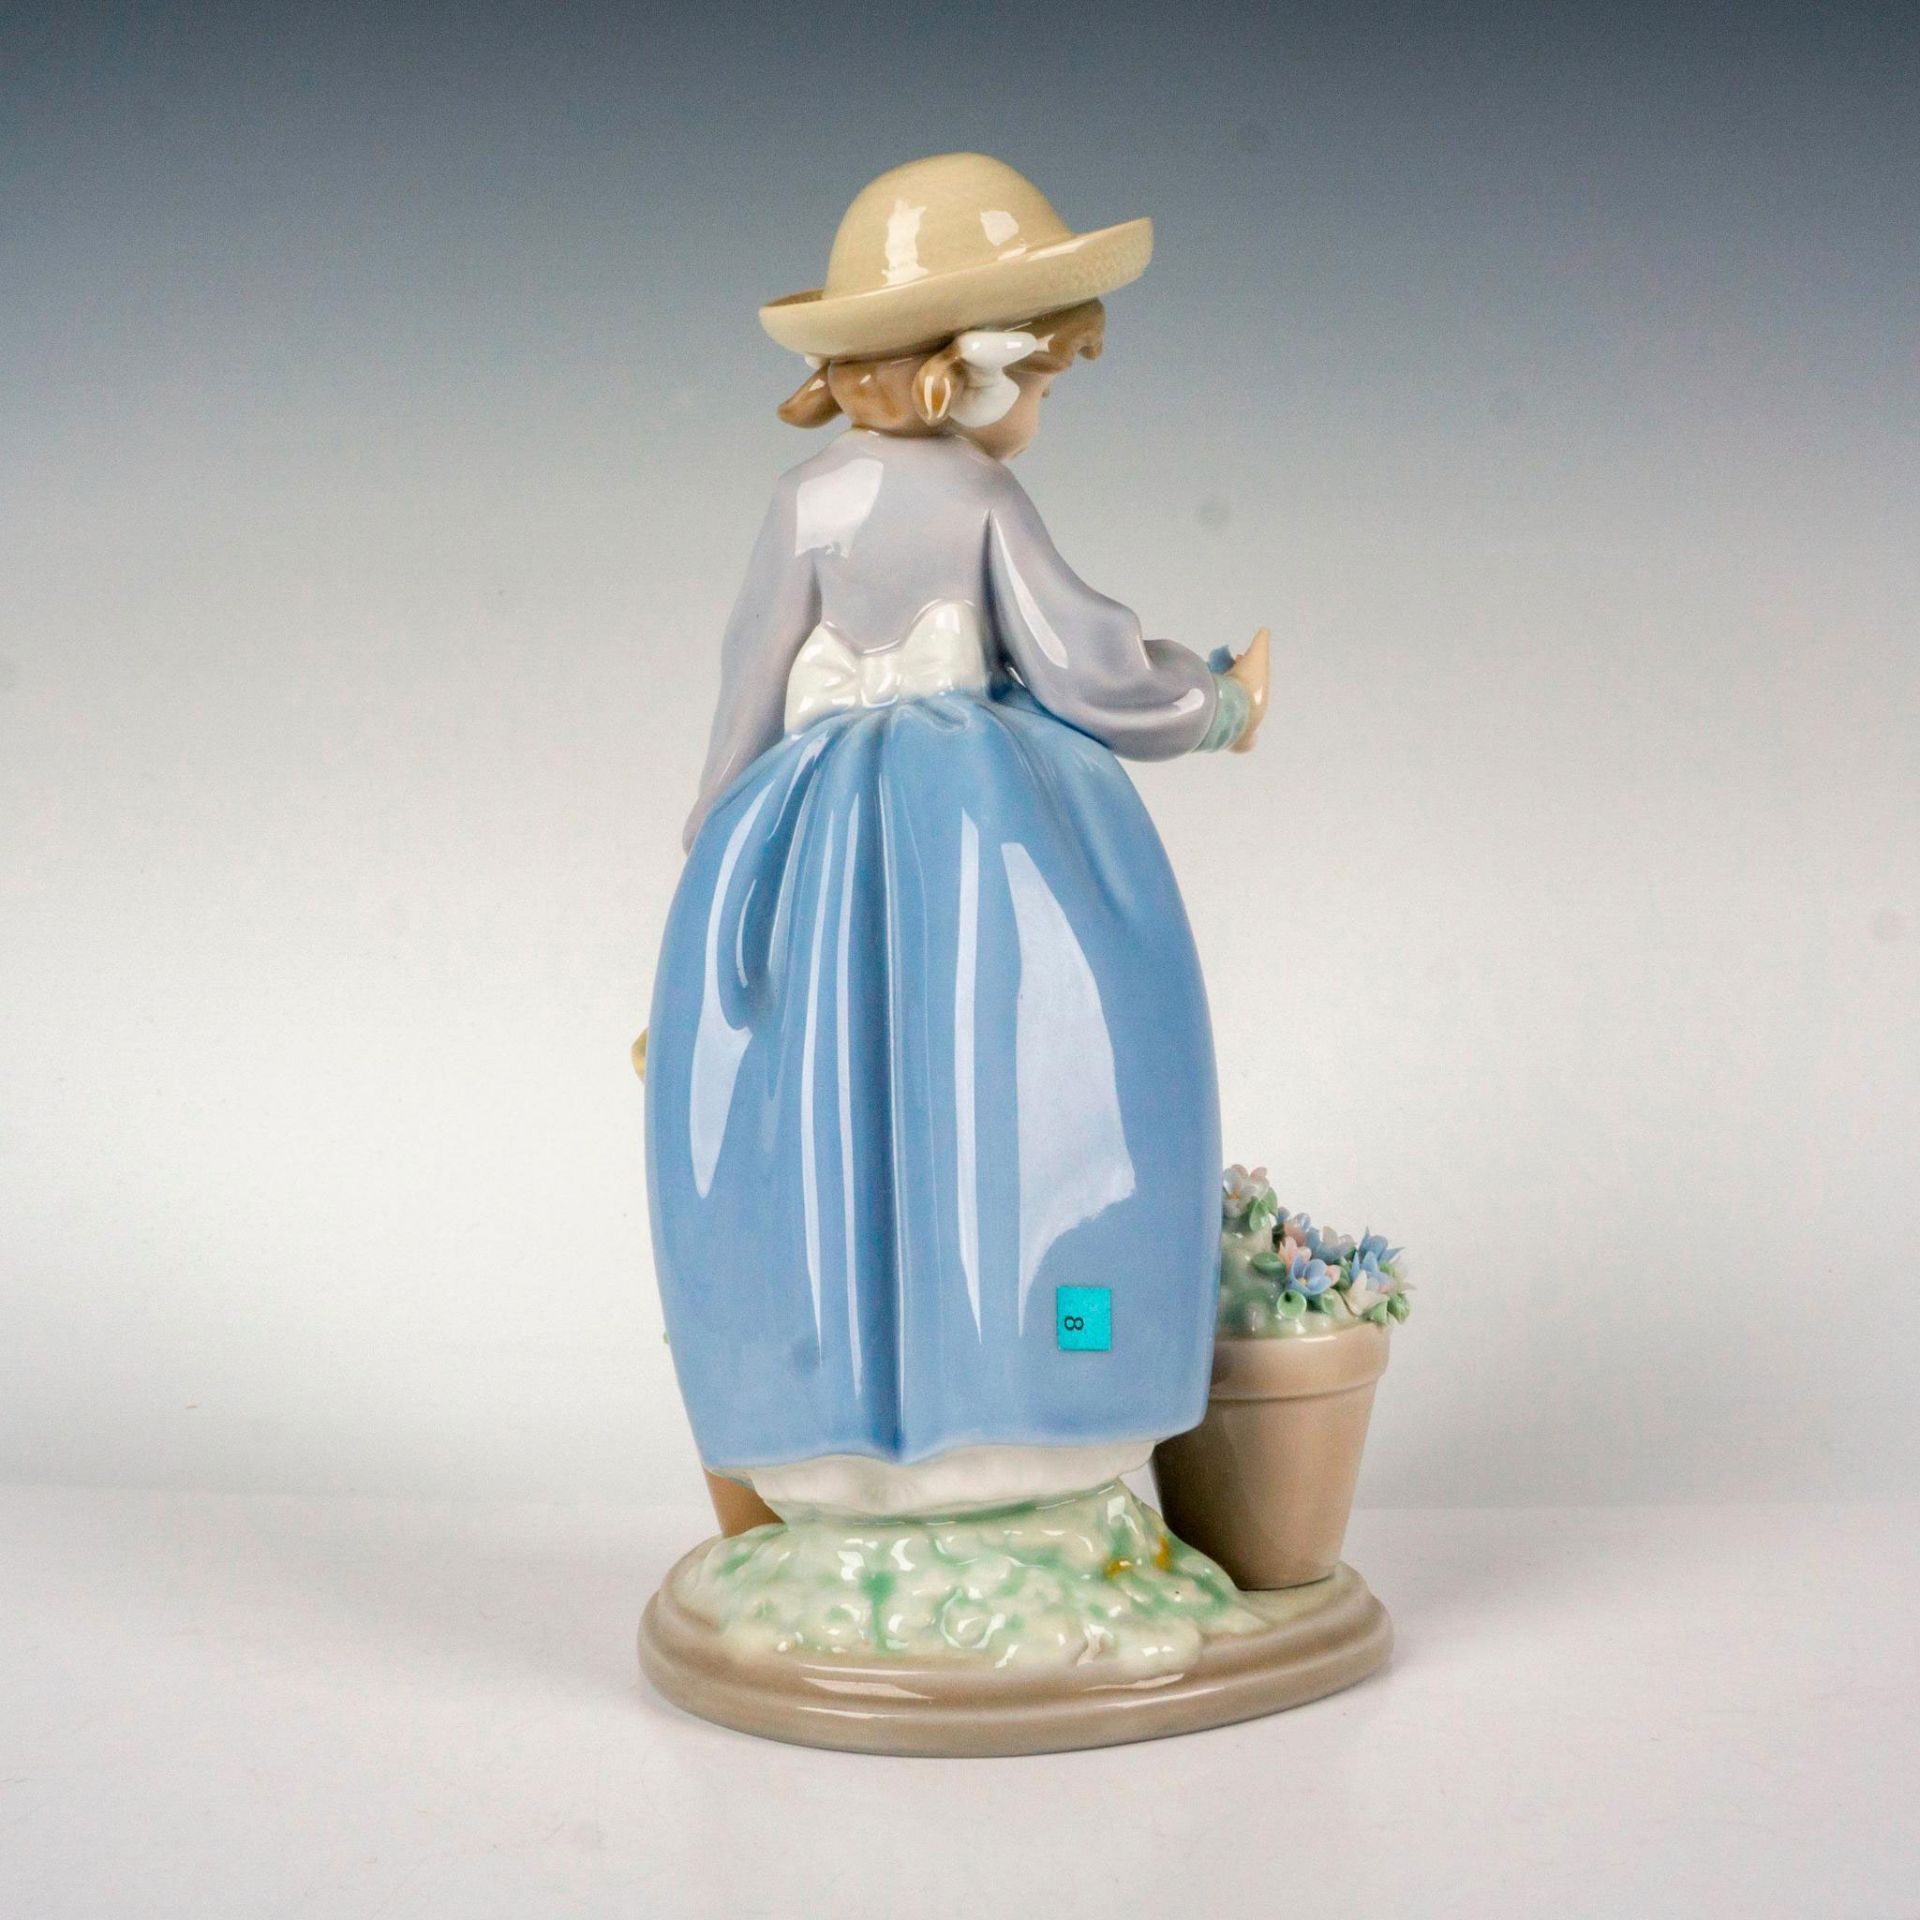 Hello, Flowers 1005543 - Lladro Porcelain Figurine - Image 2 of 4